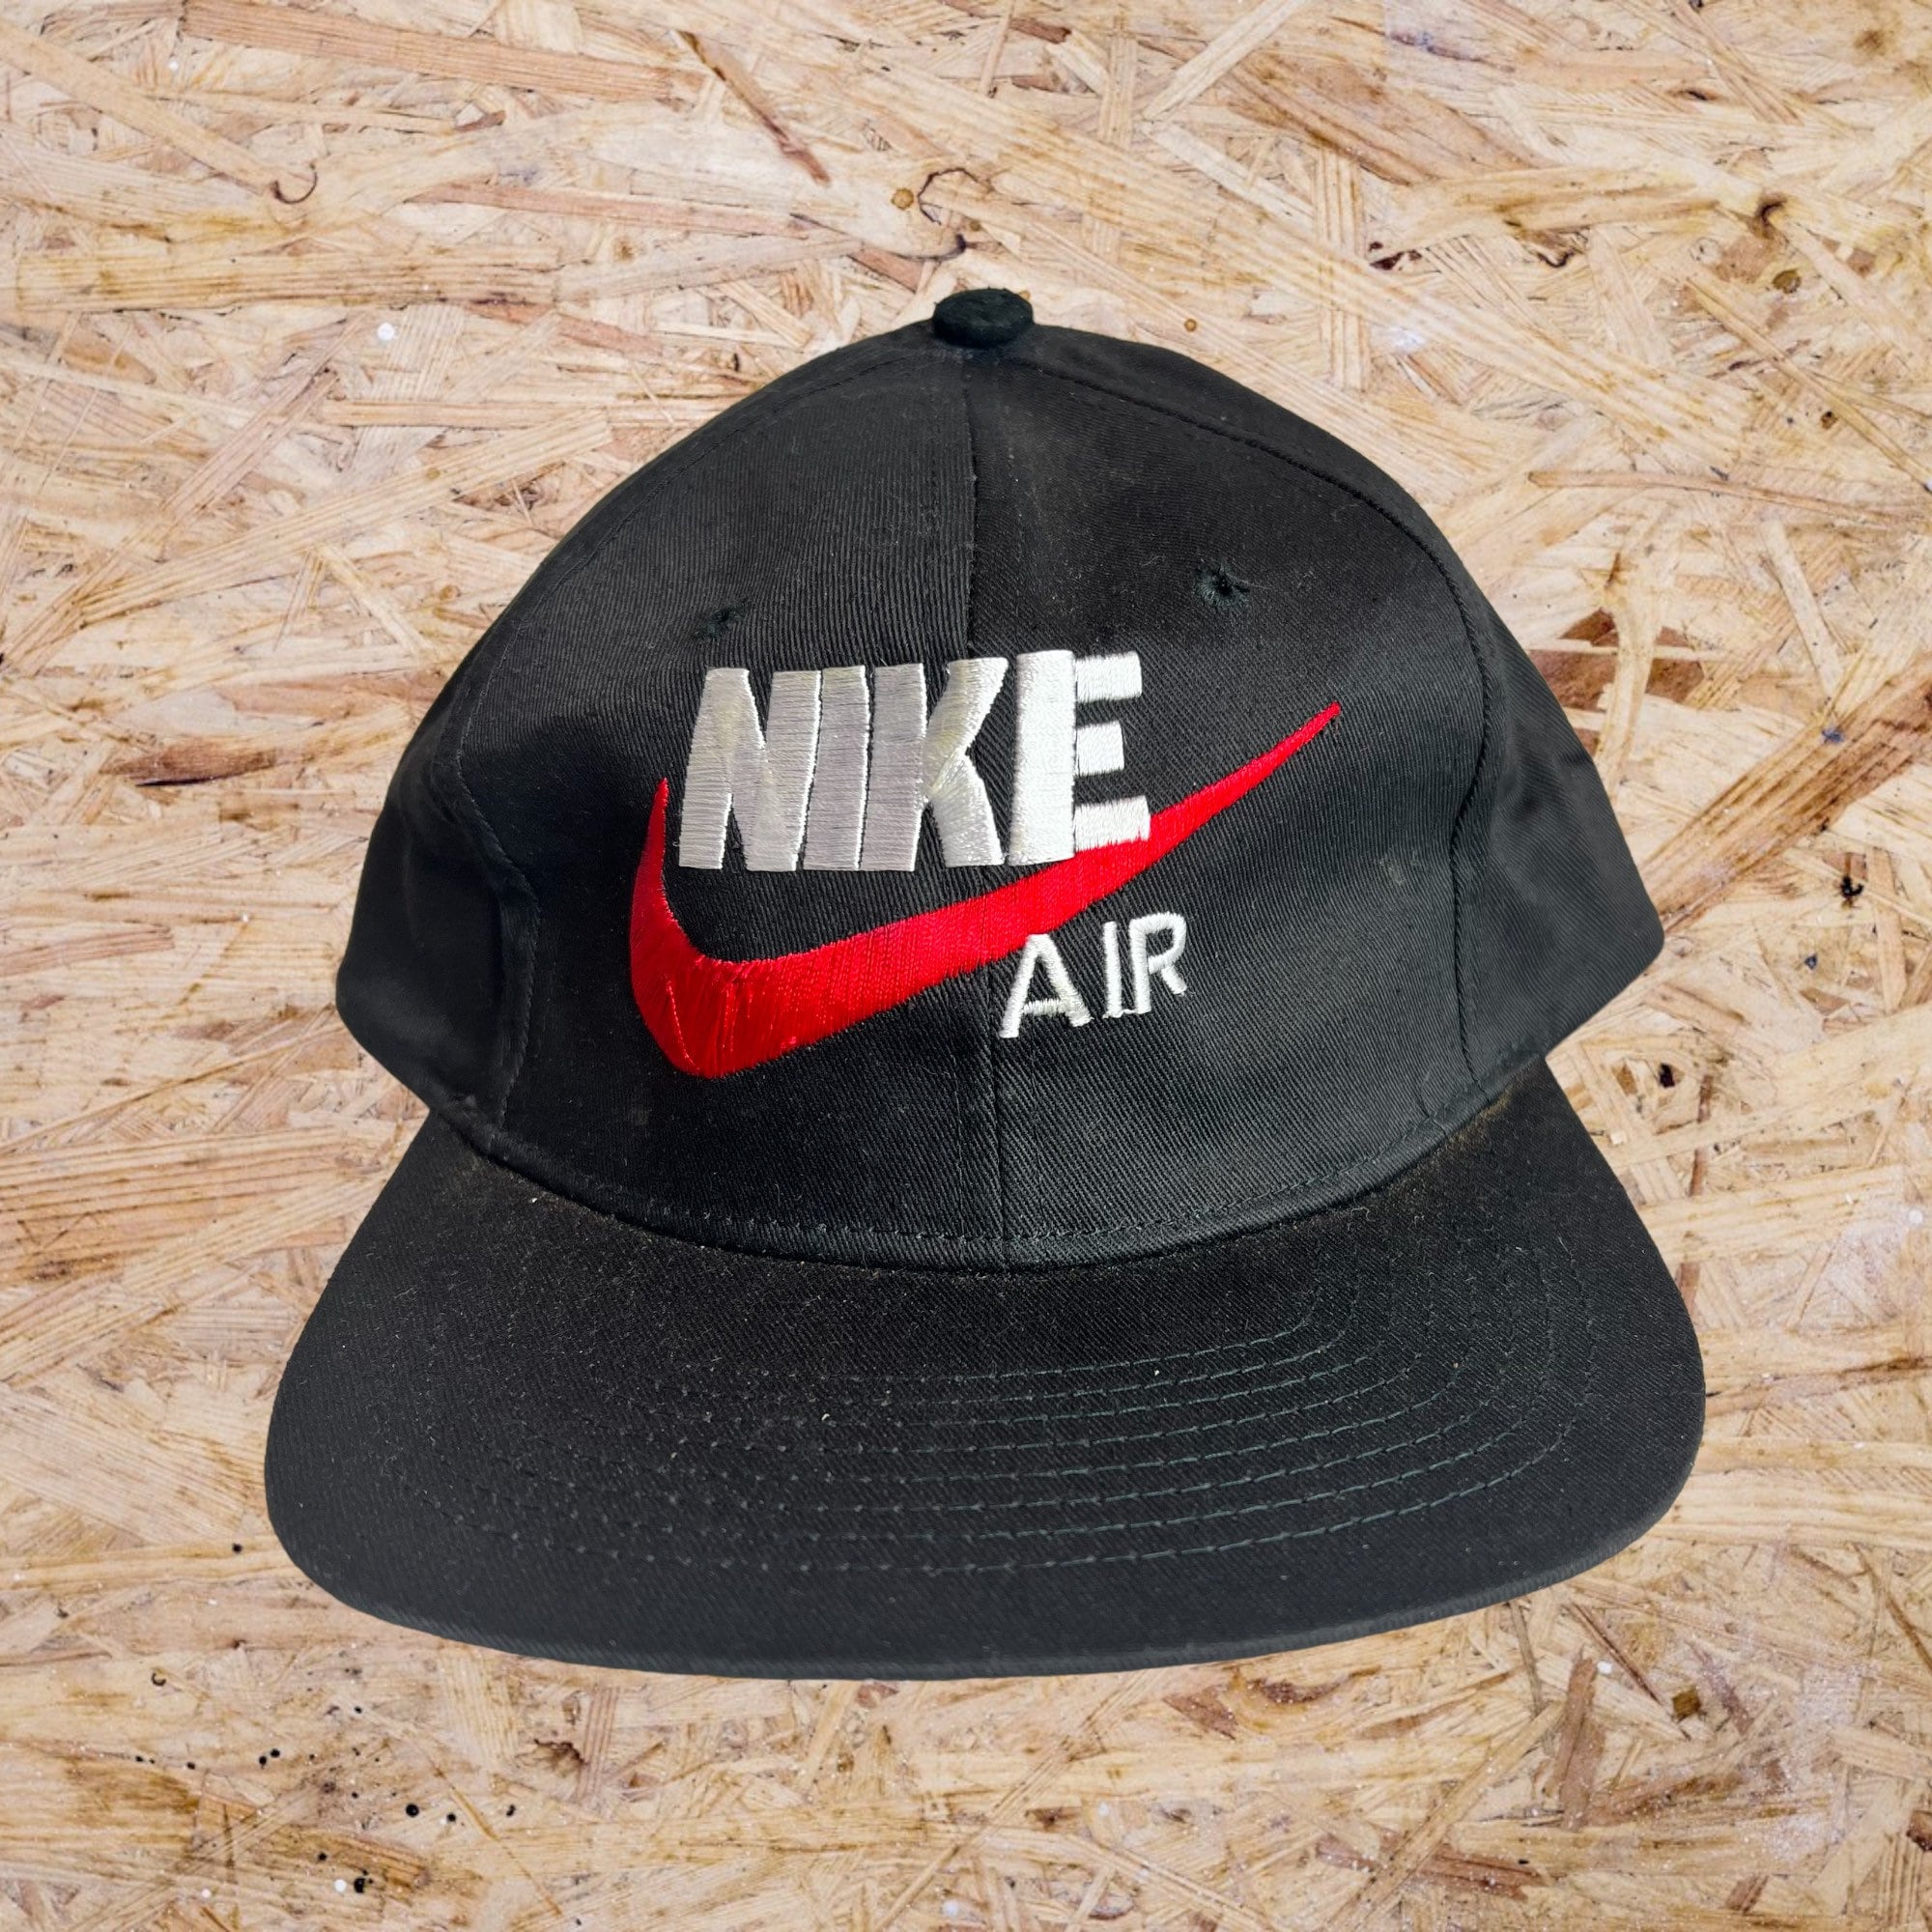 Vintage Nike Air Snapback Hat Adjustable - Etsy